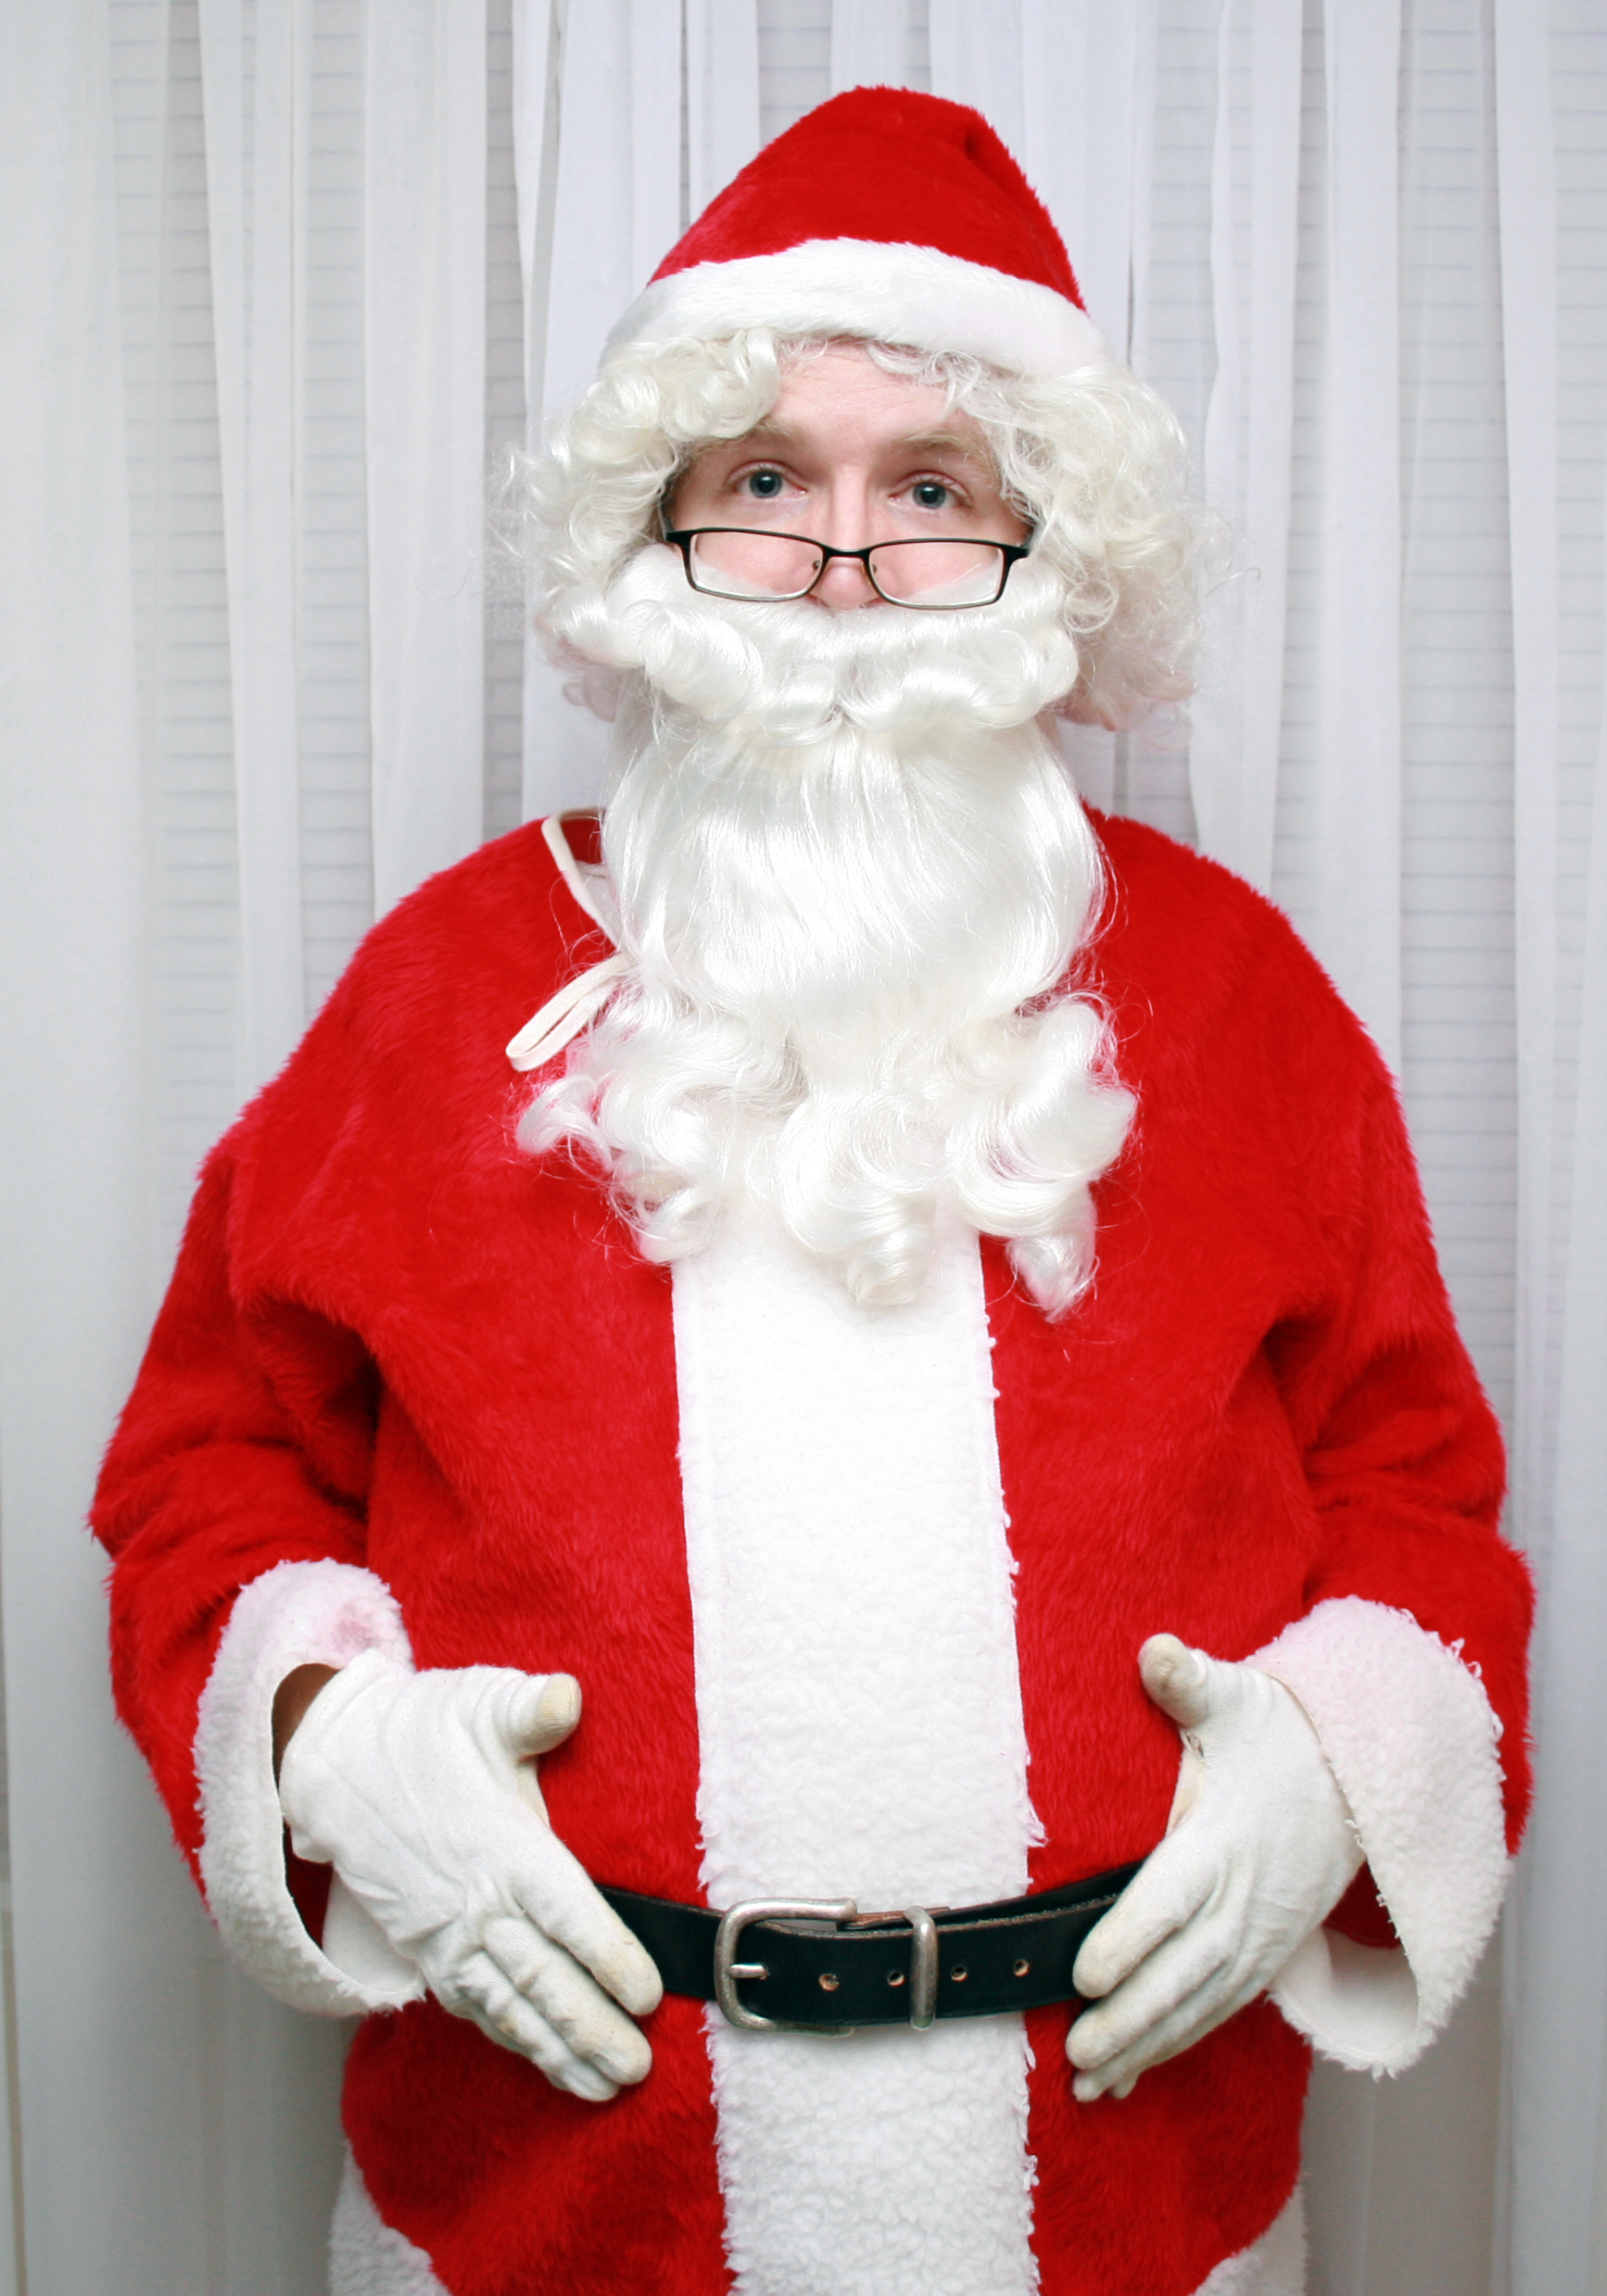 Ryan Sears as Santa Claus